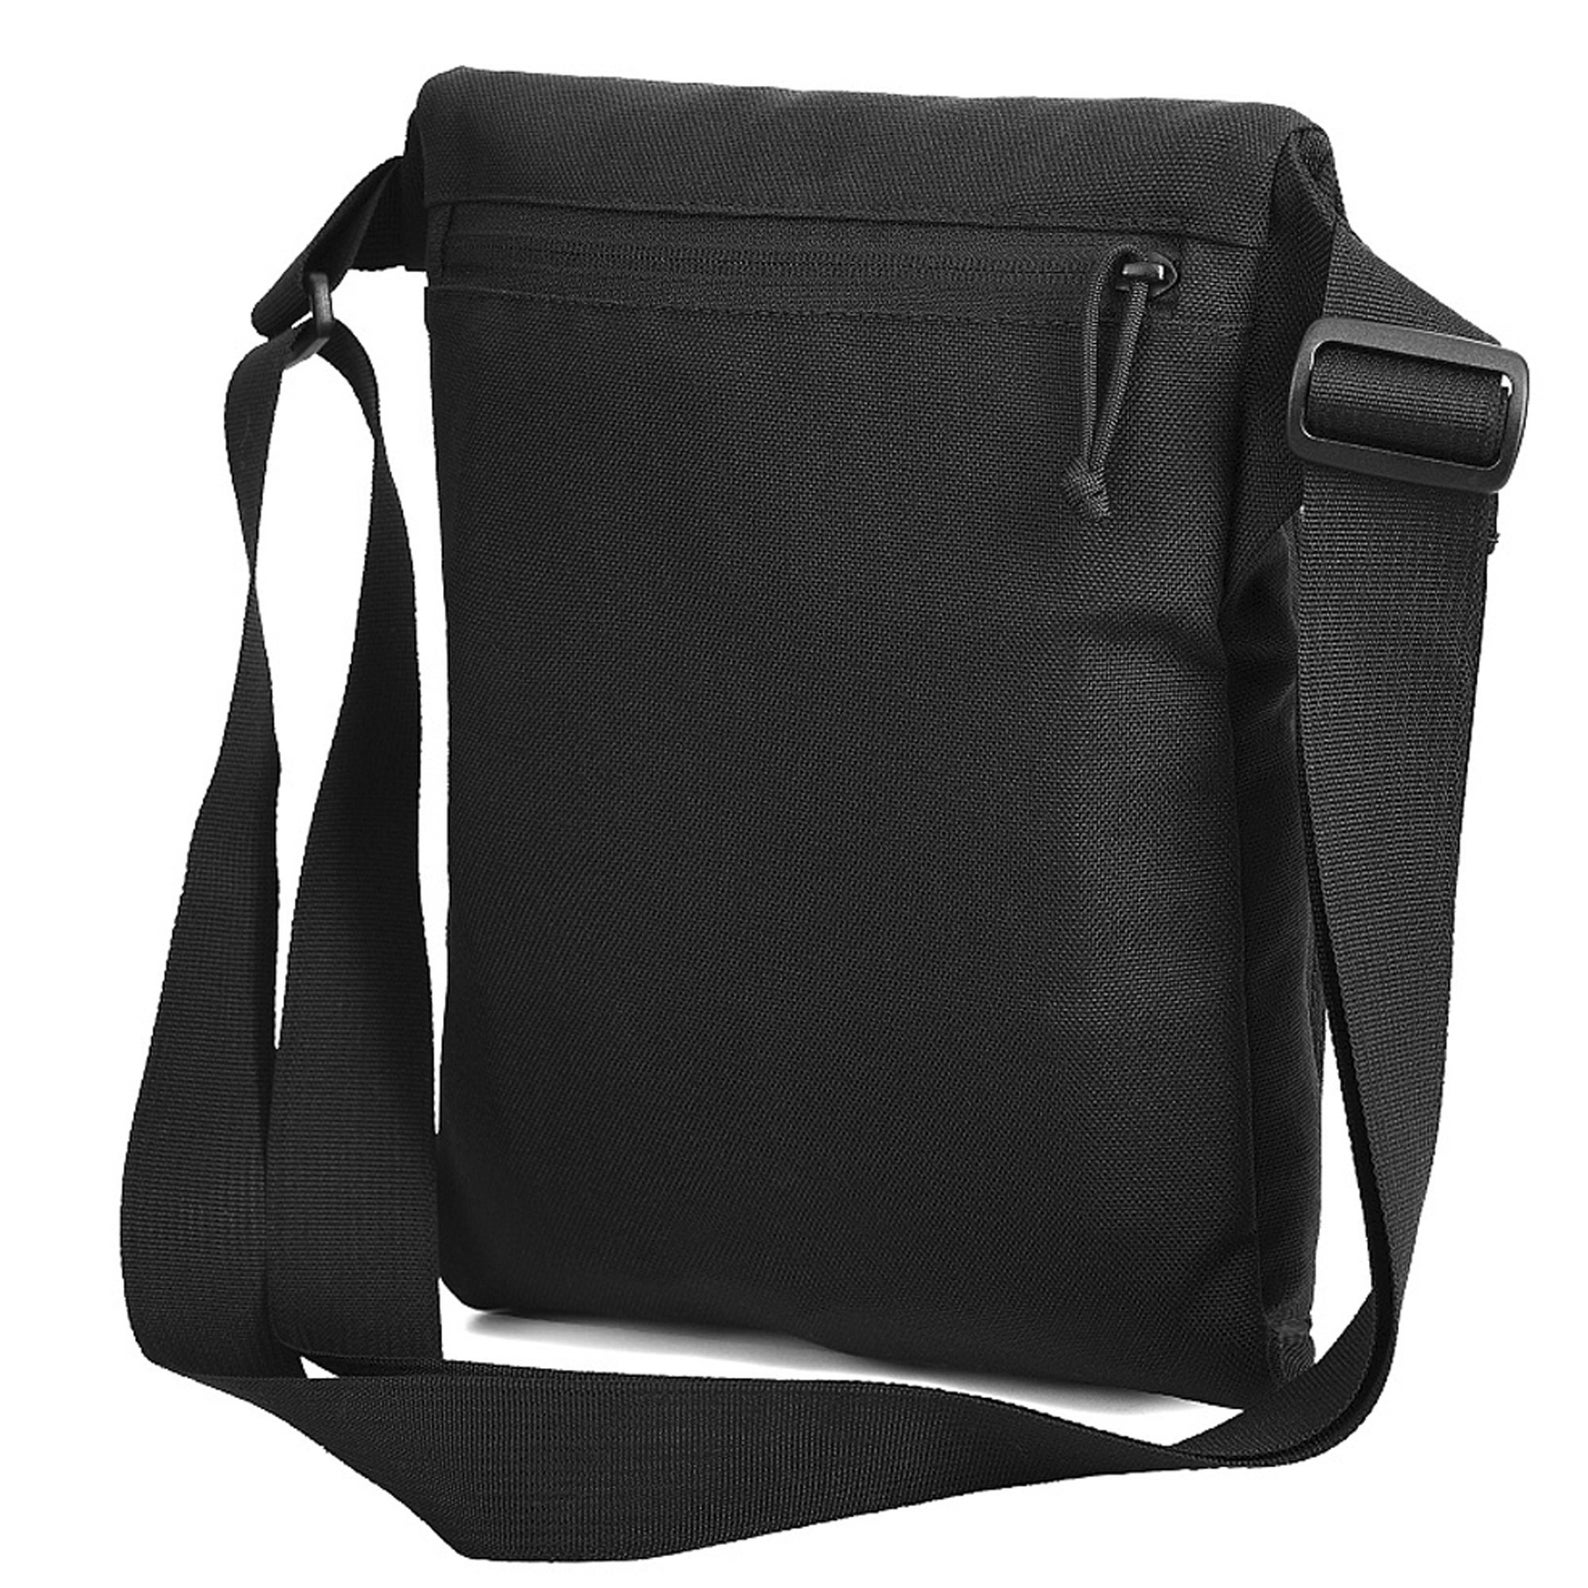 Man Bag Messenger Men's Bag from cordura Techwear bag | Etsy